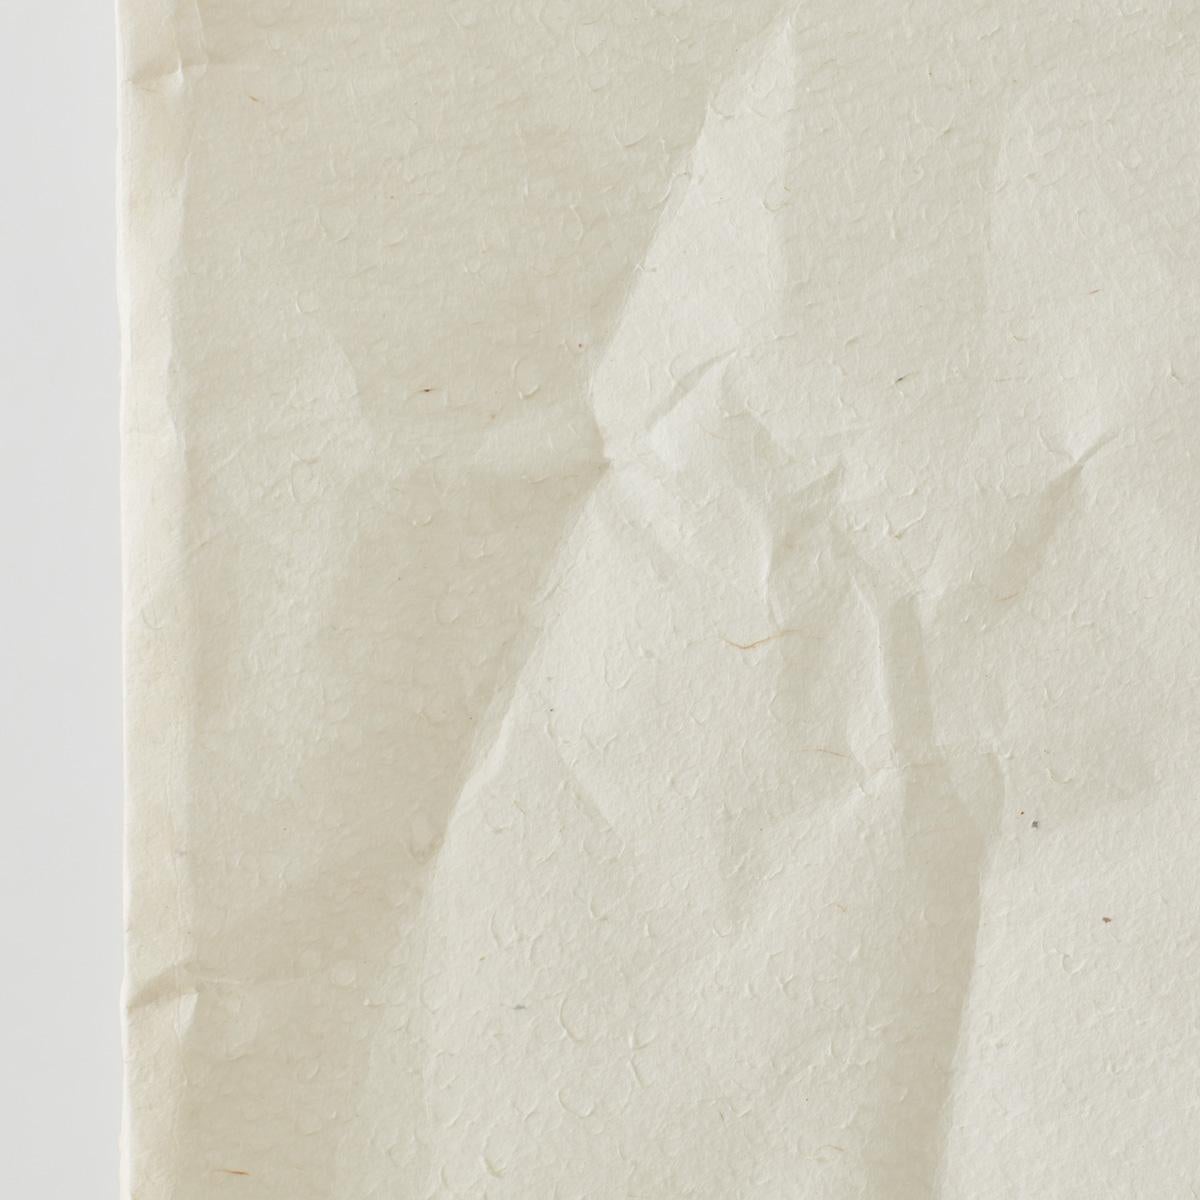 David Horan Paper floor light in semi-matte finish for Béton Brut, UK, 2022 For Sale 11